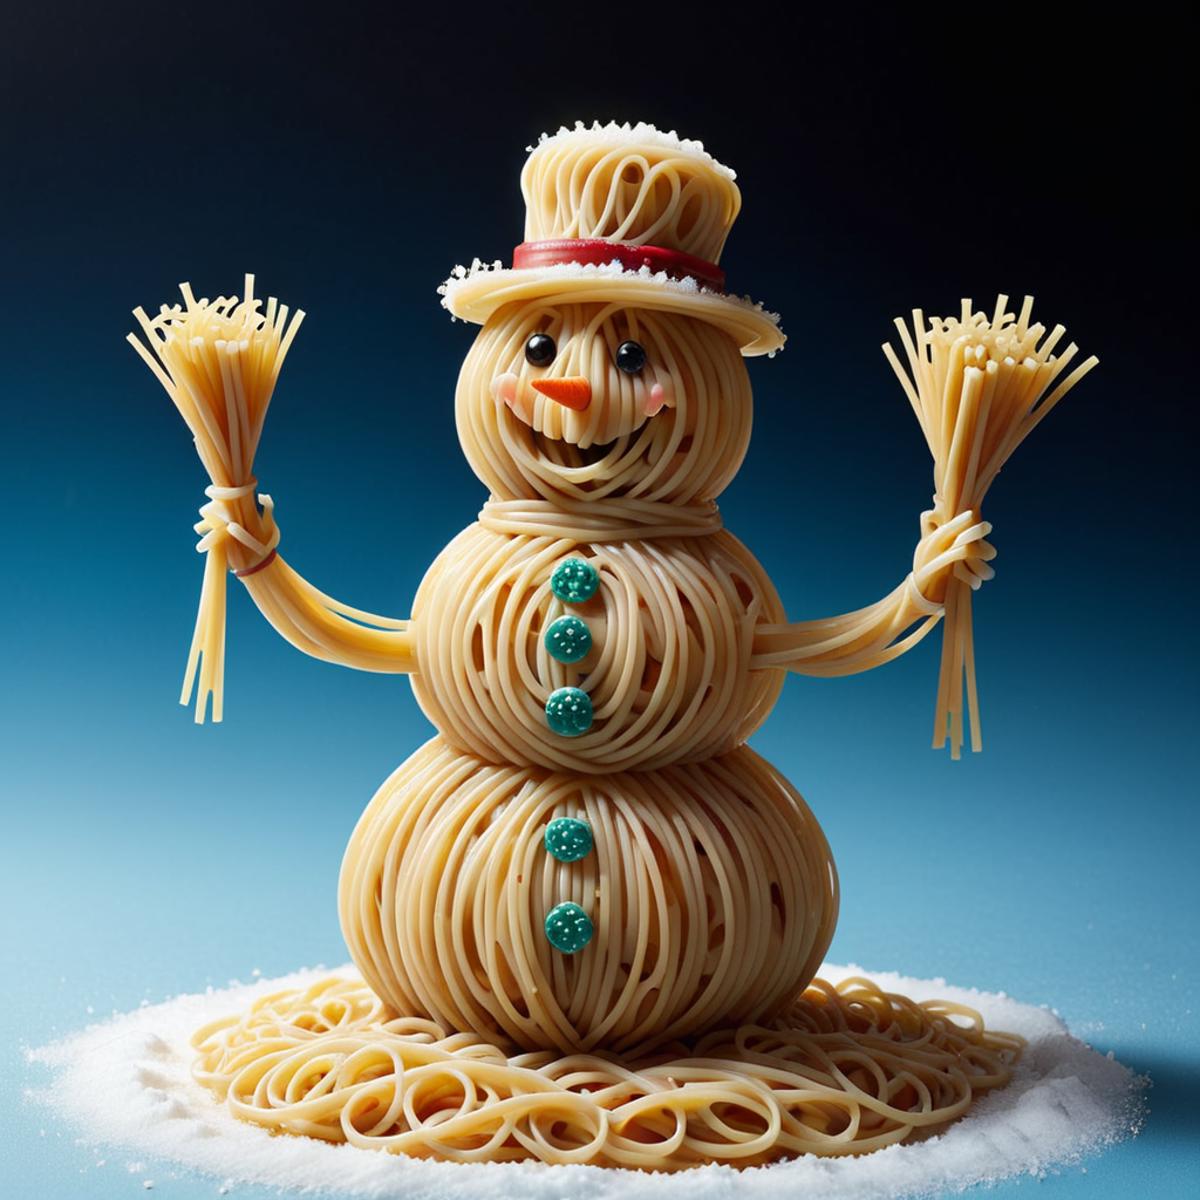 SpaghettifyXL image by nocor1i8